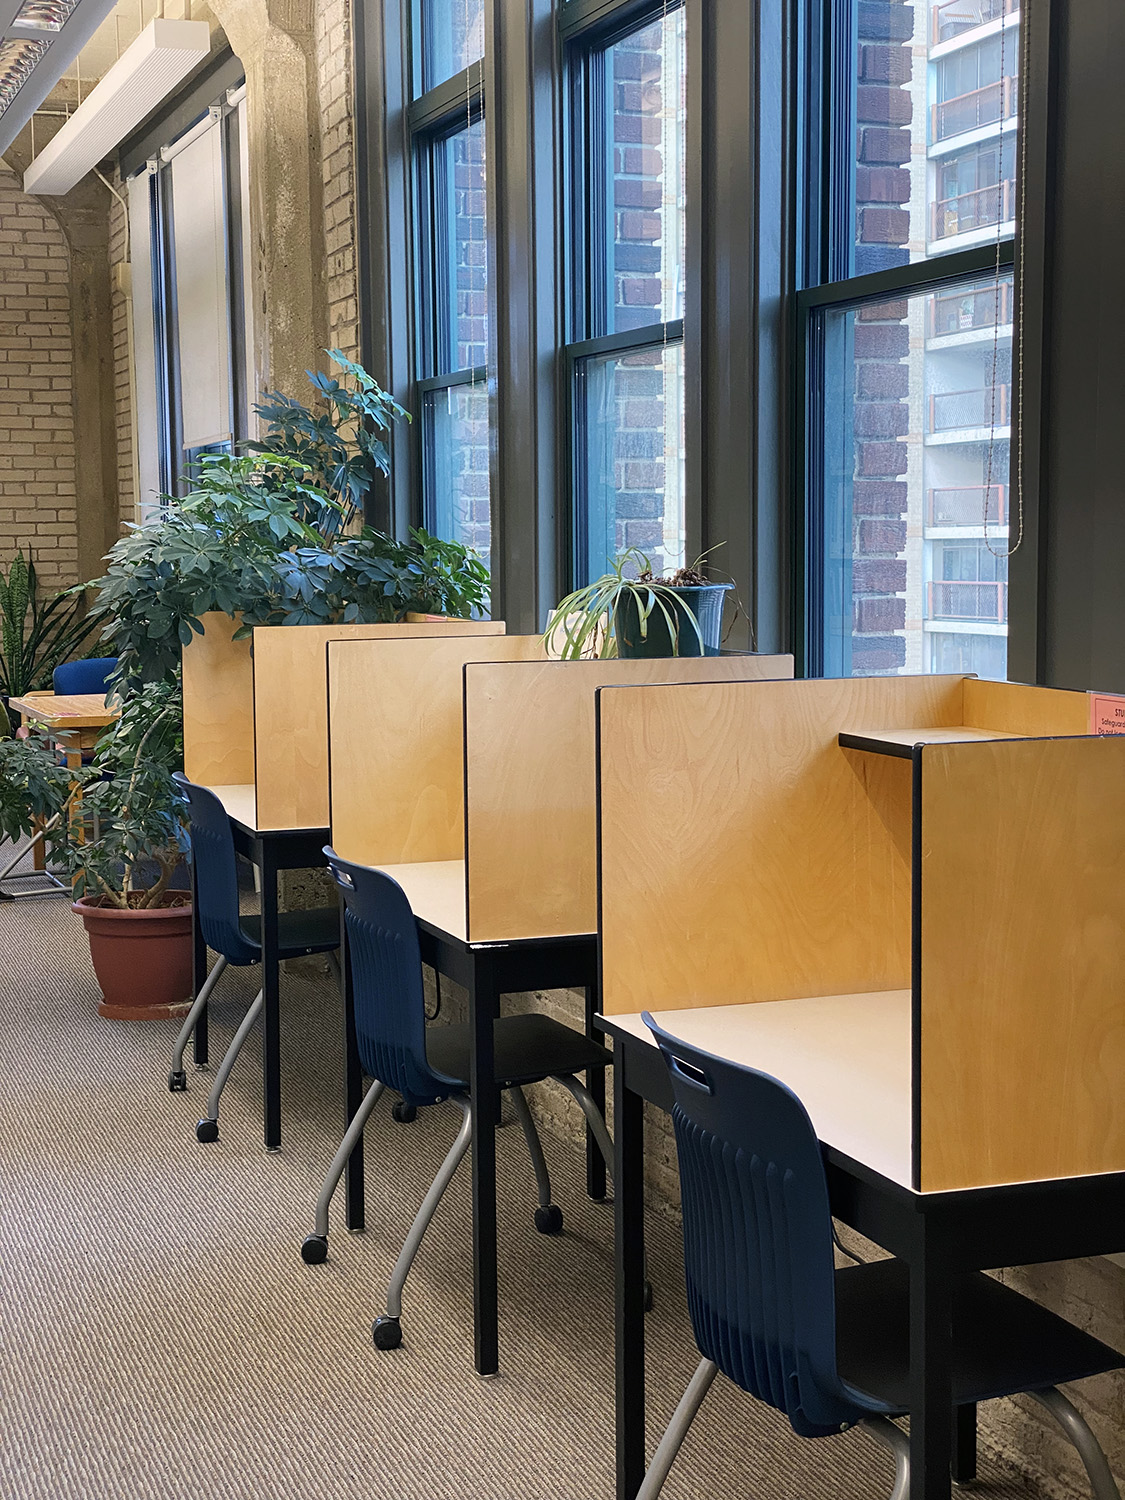 Individual study desks line a wall of windows.